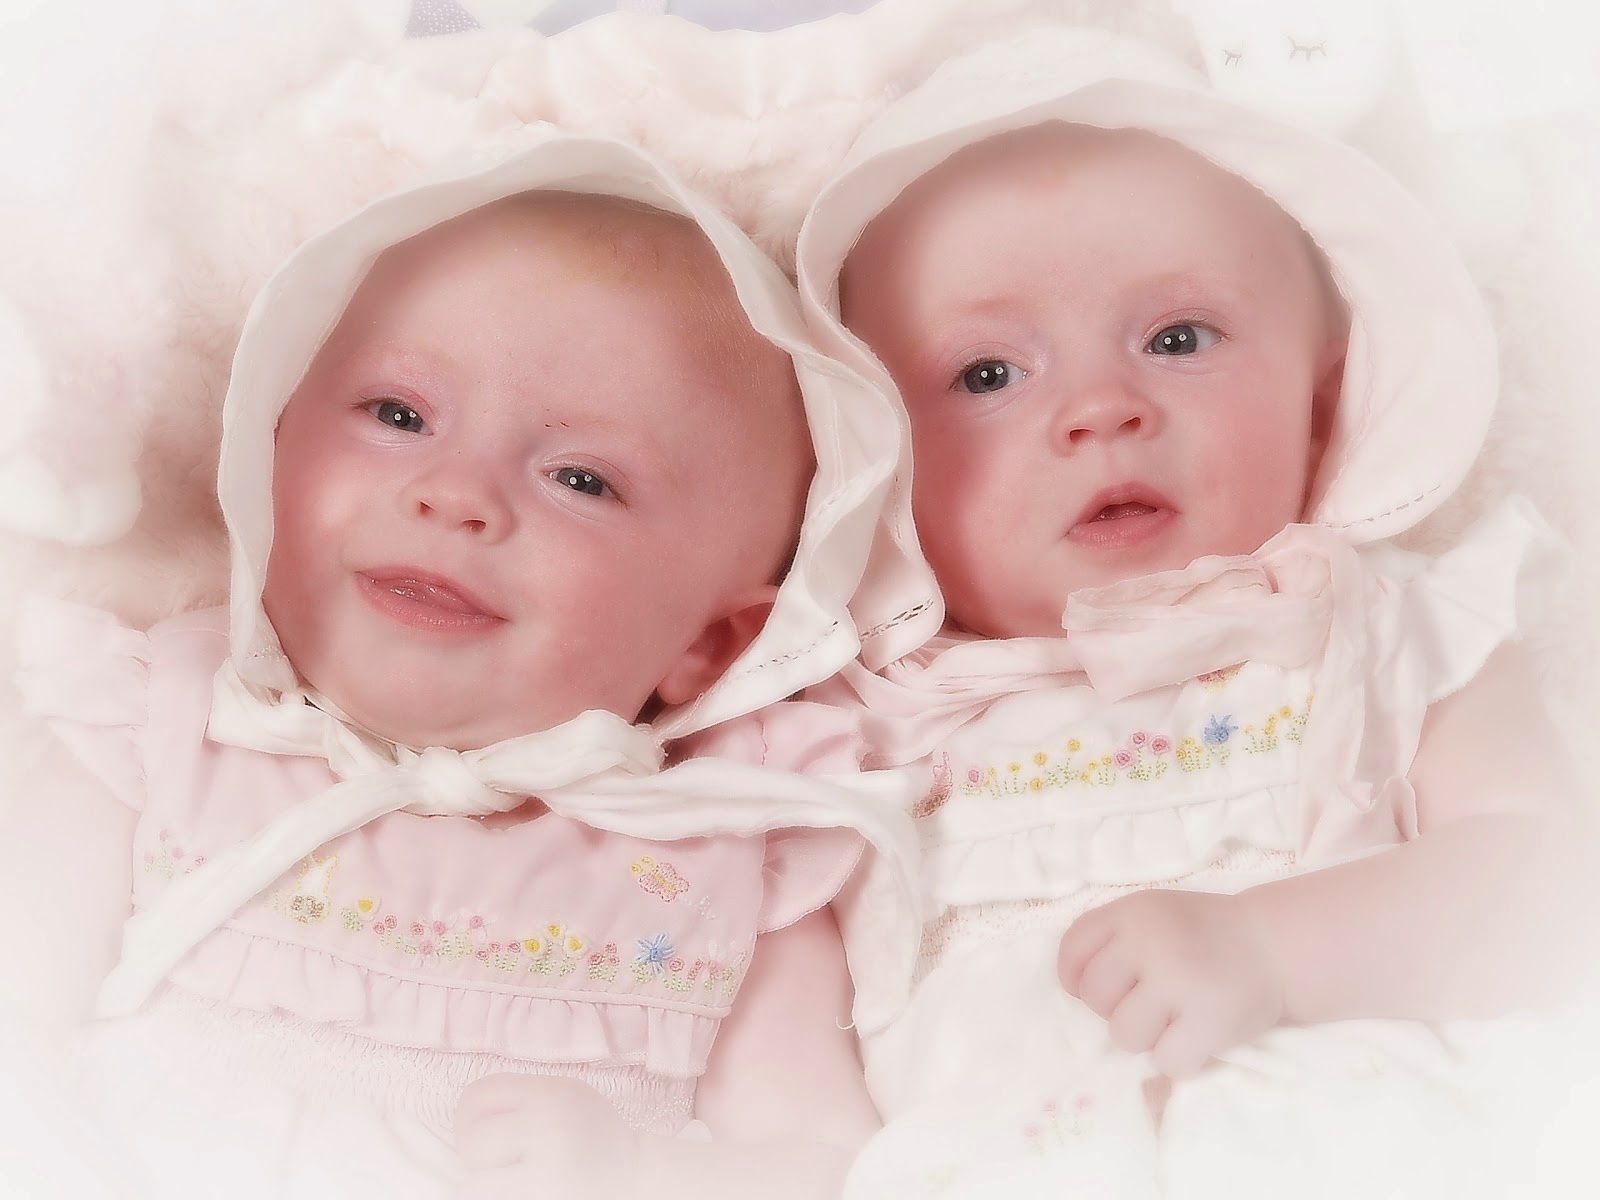 Twins Babies Wallpaper HD for Desktop - Uncalke.com